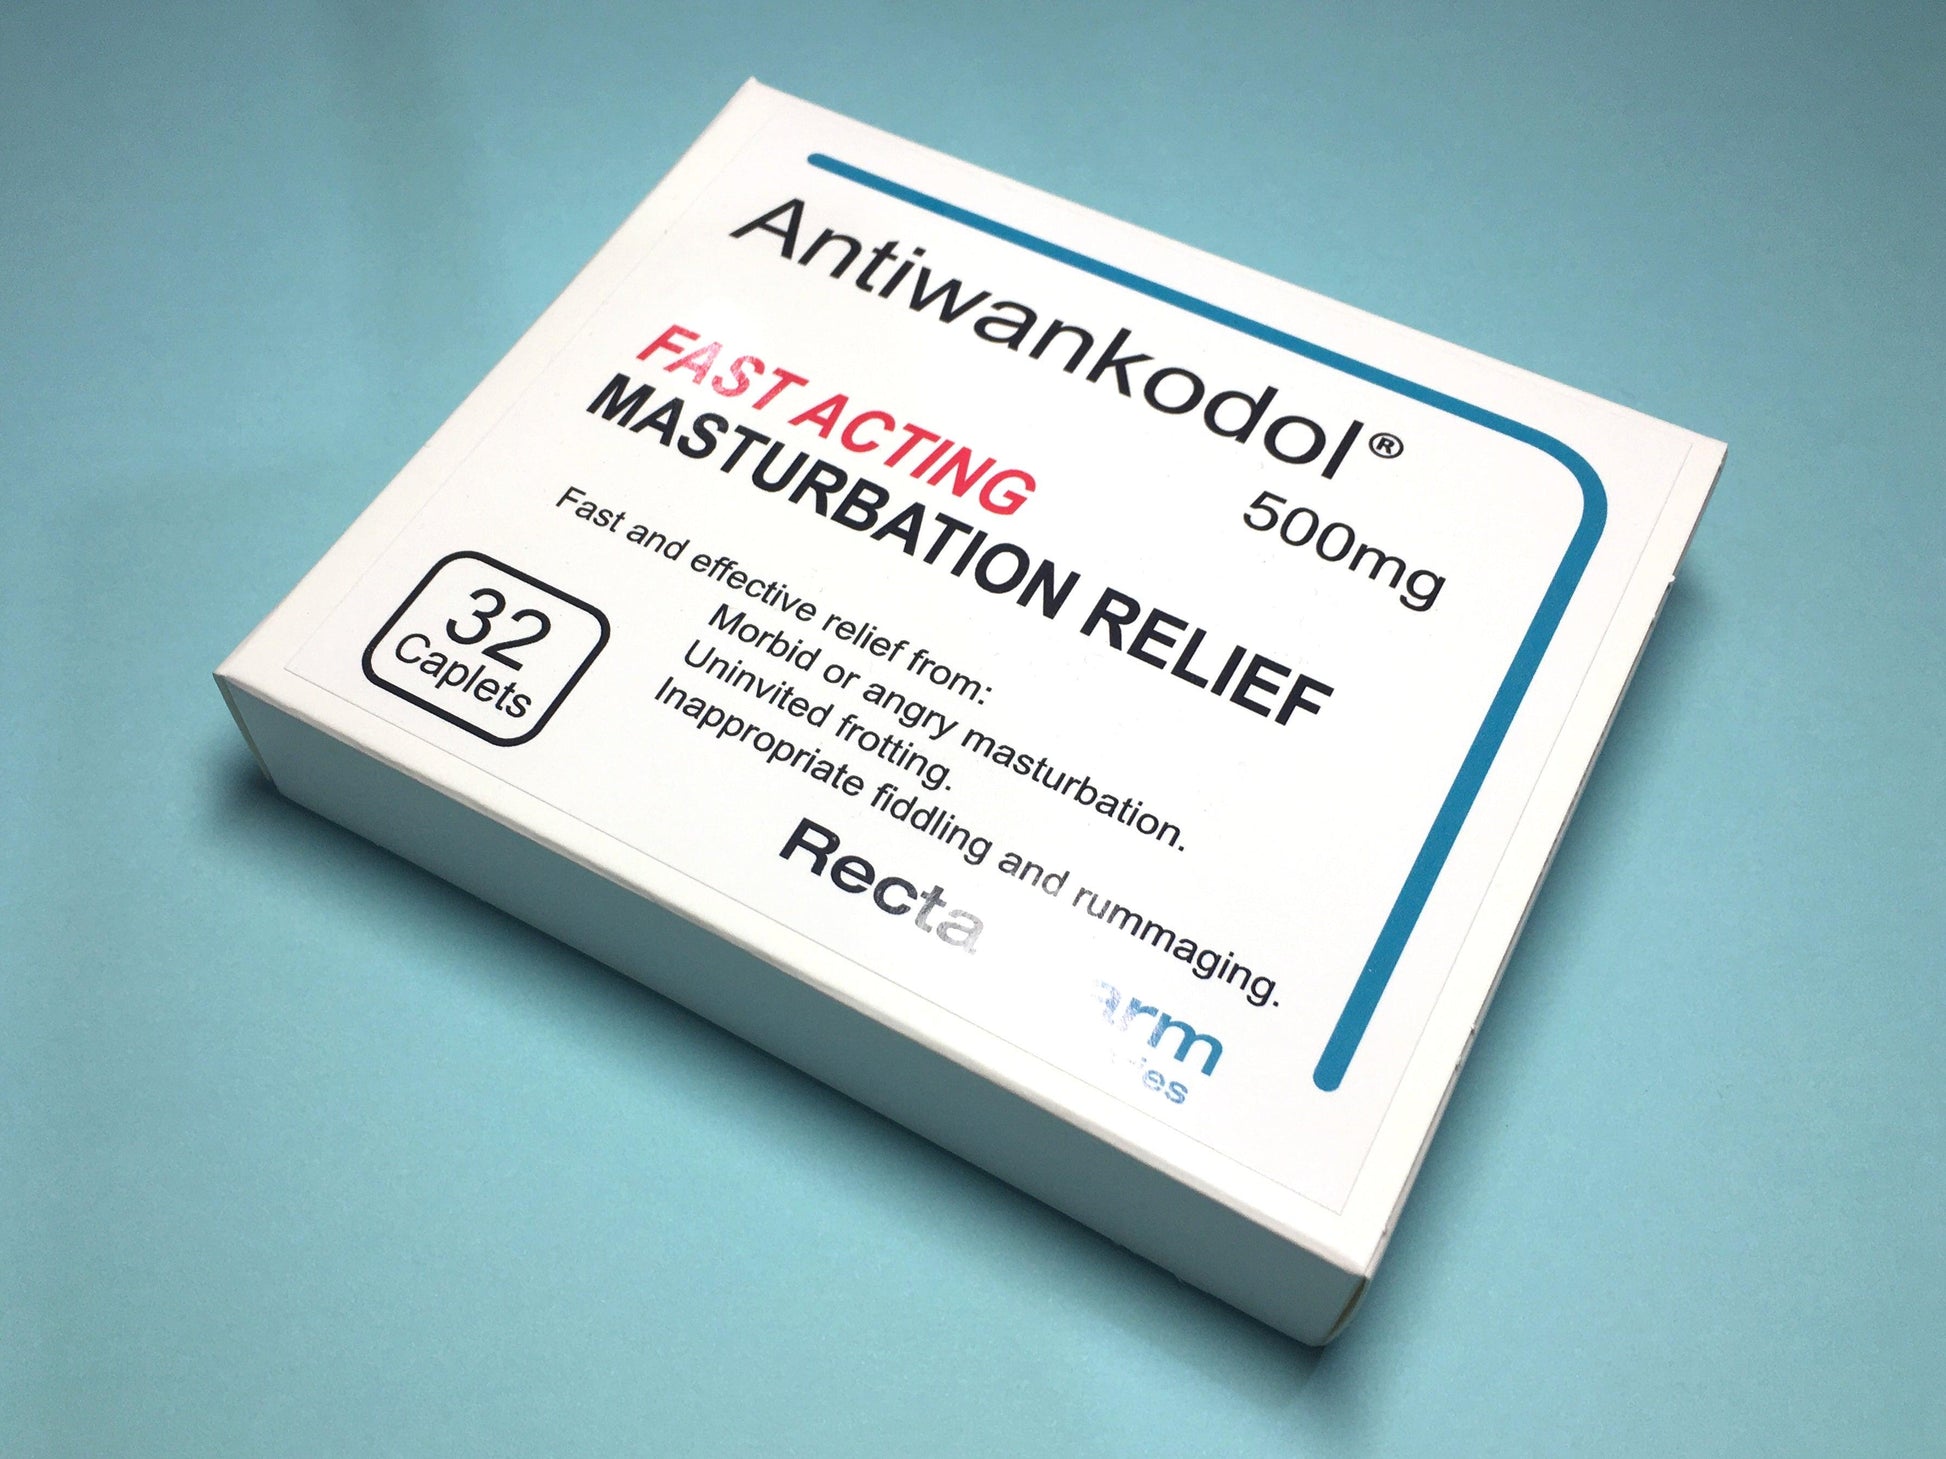 Pill Box - Antiwankodol - Mr. Inappropriate 